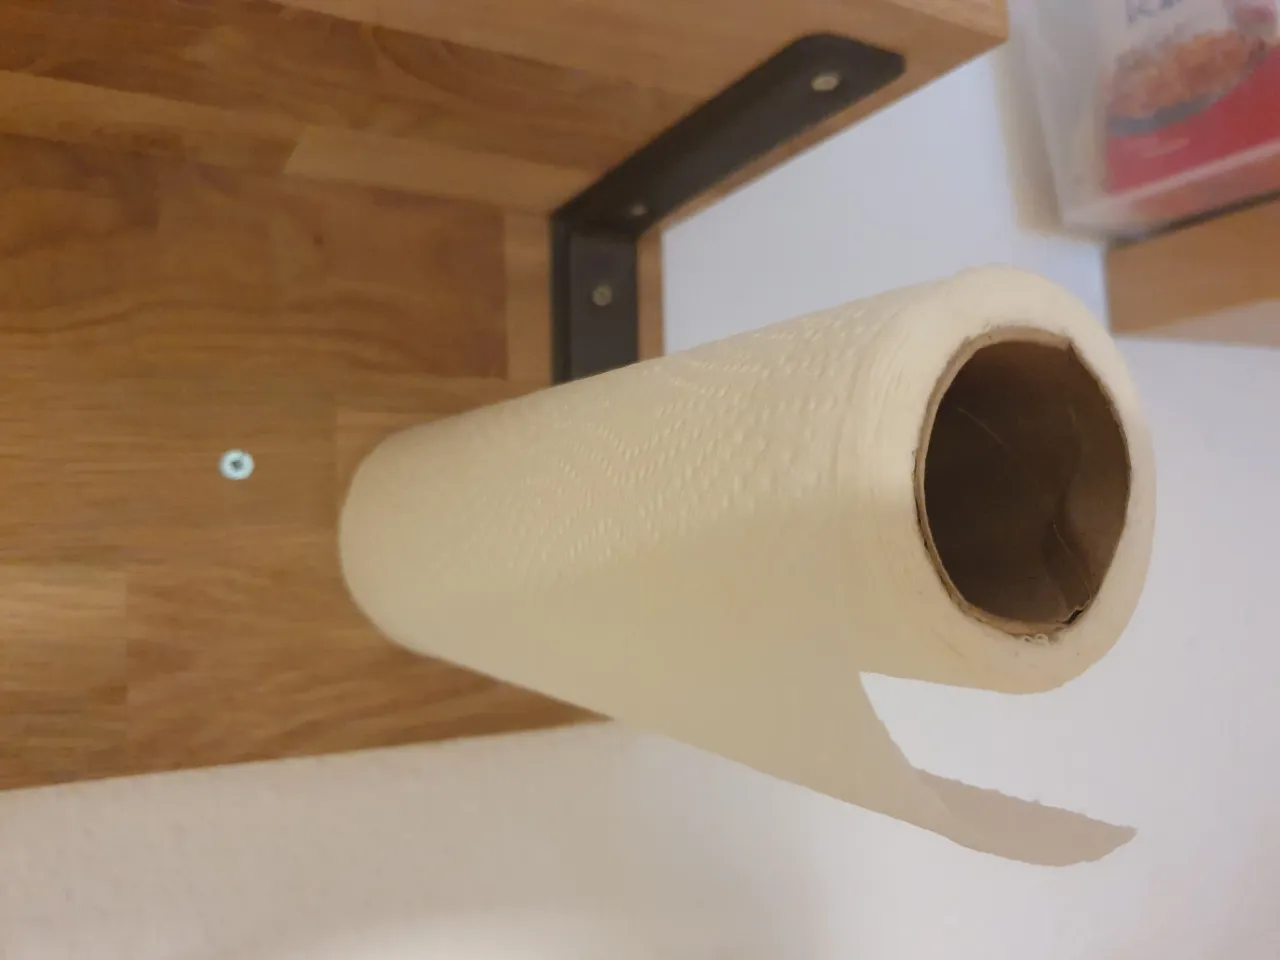 Making a paper towel holder